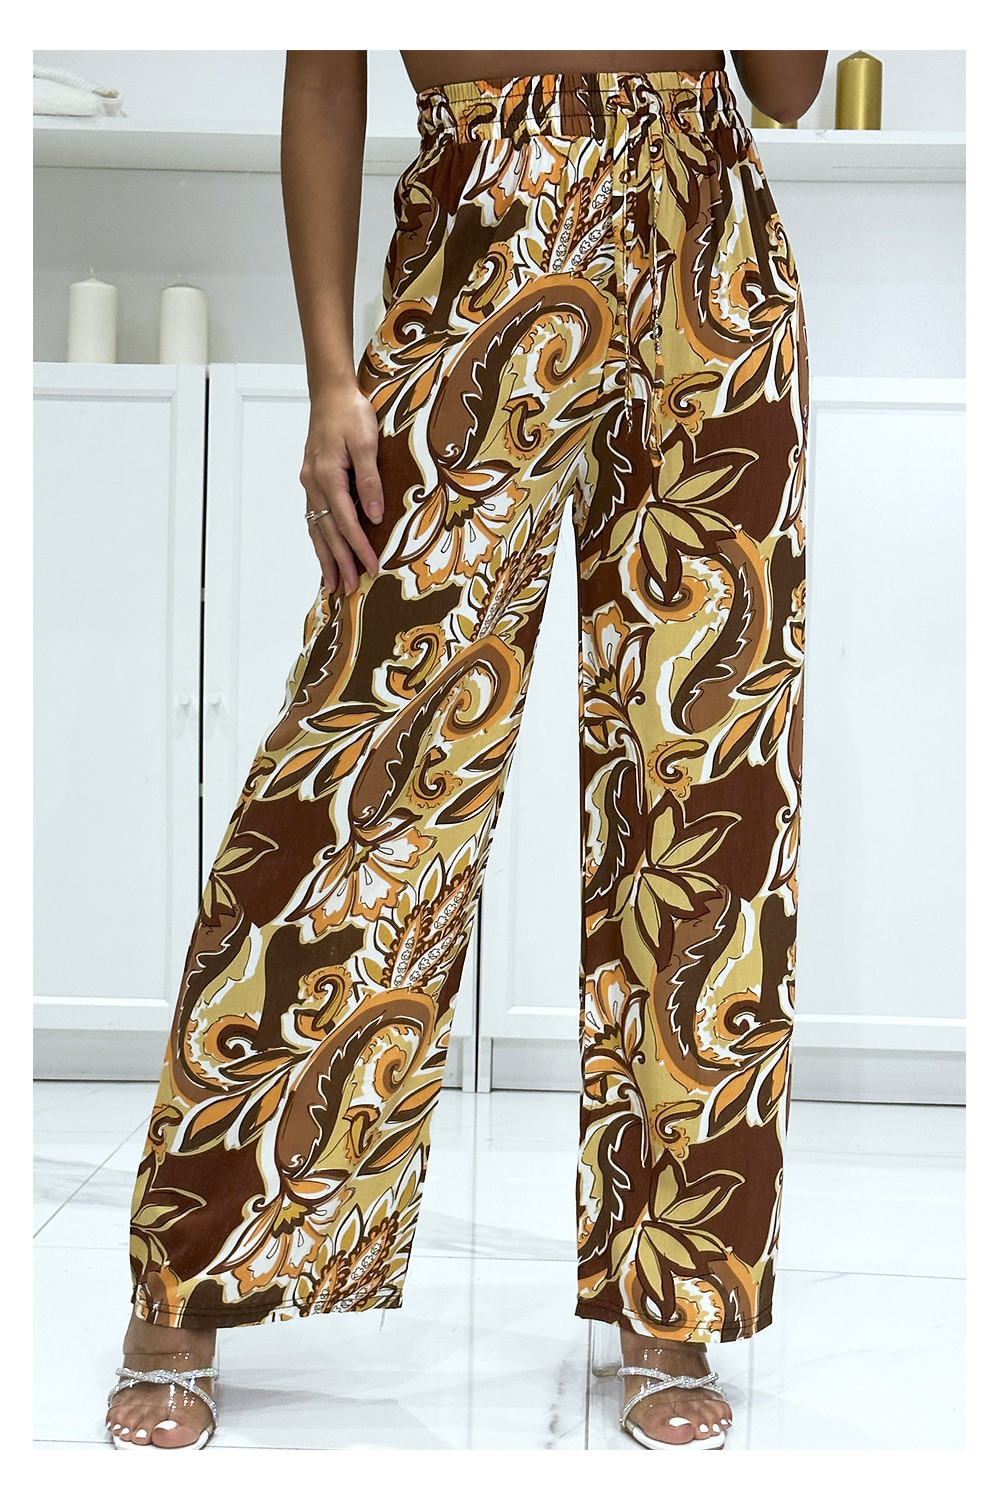 Camel cotton palazzo pants with pretty pattern